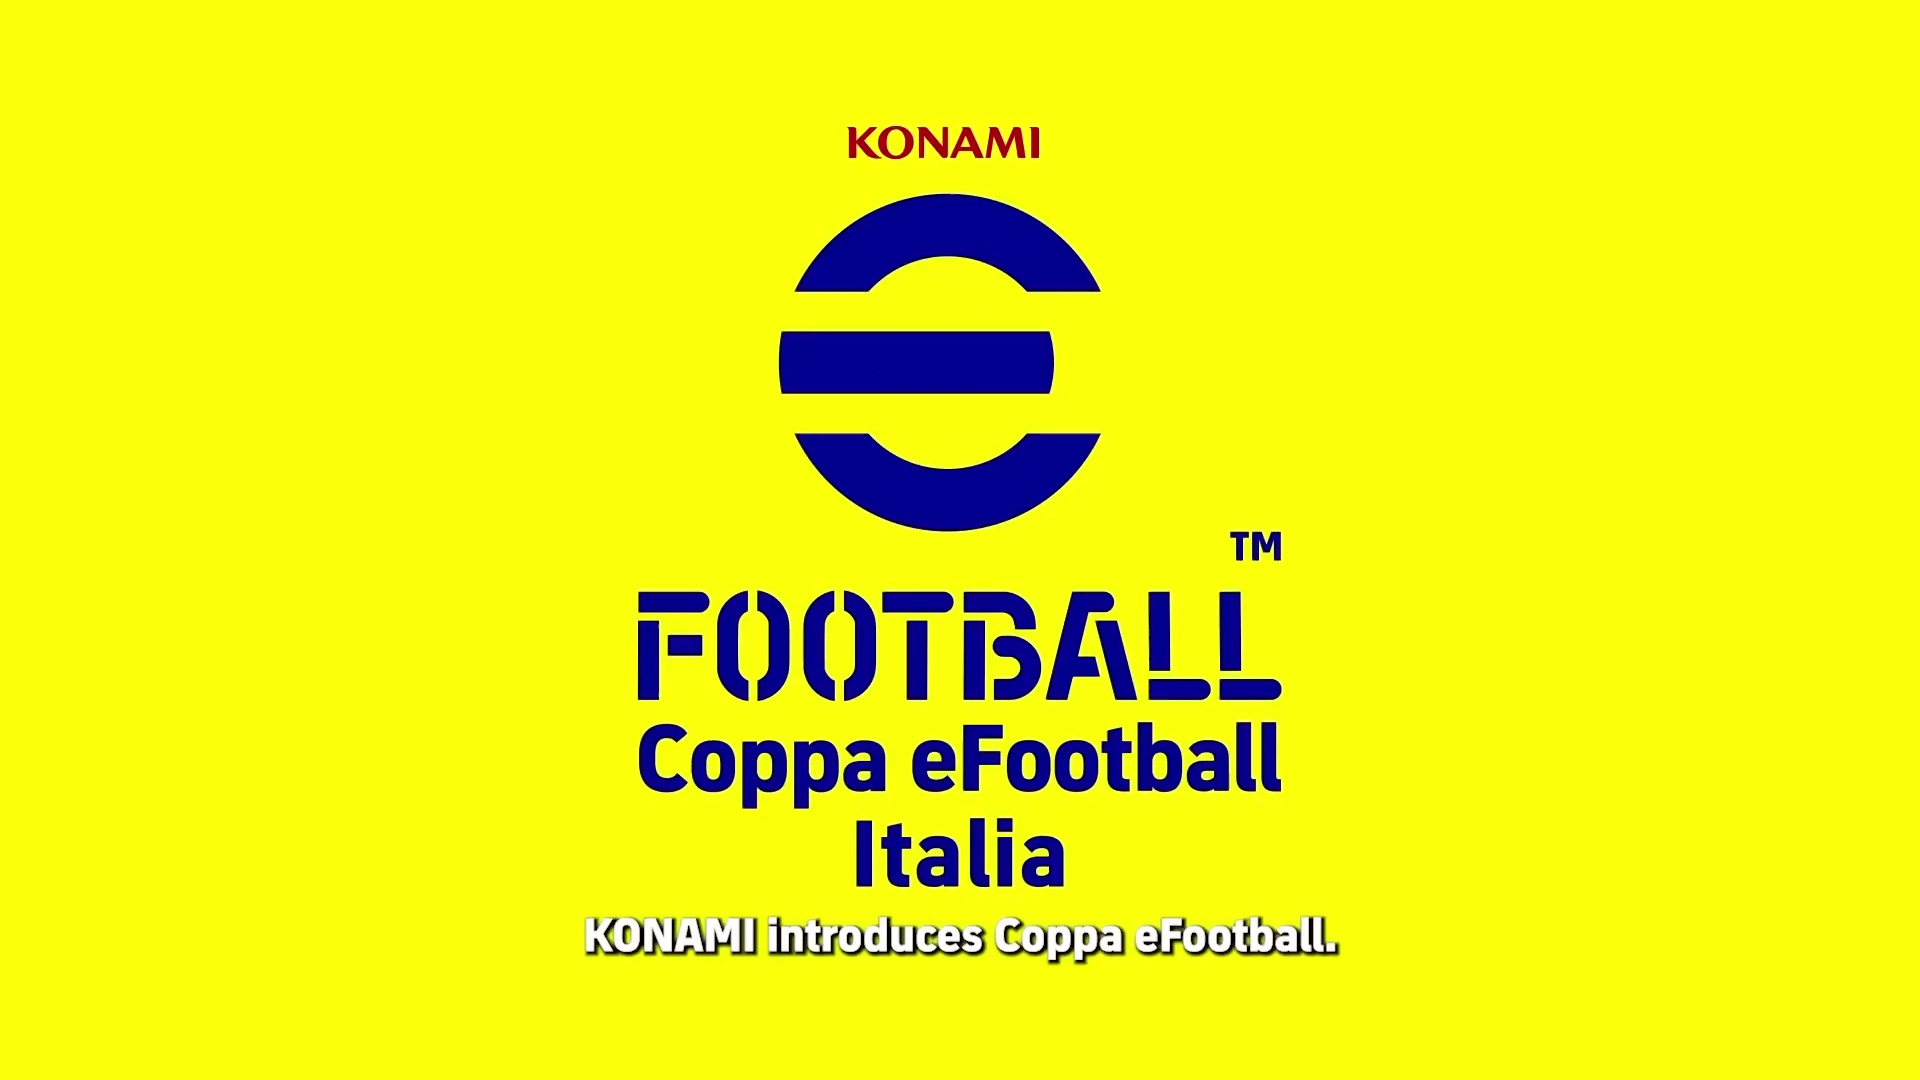 Konami - coppa eFootball italia